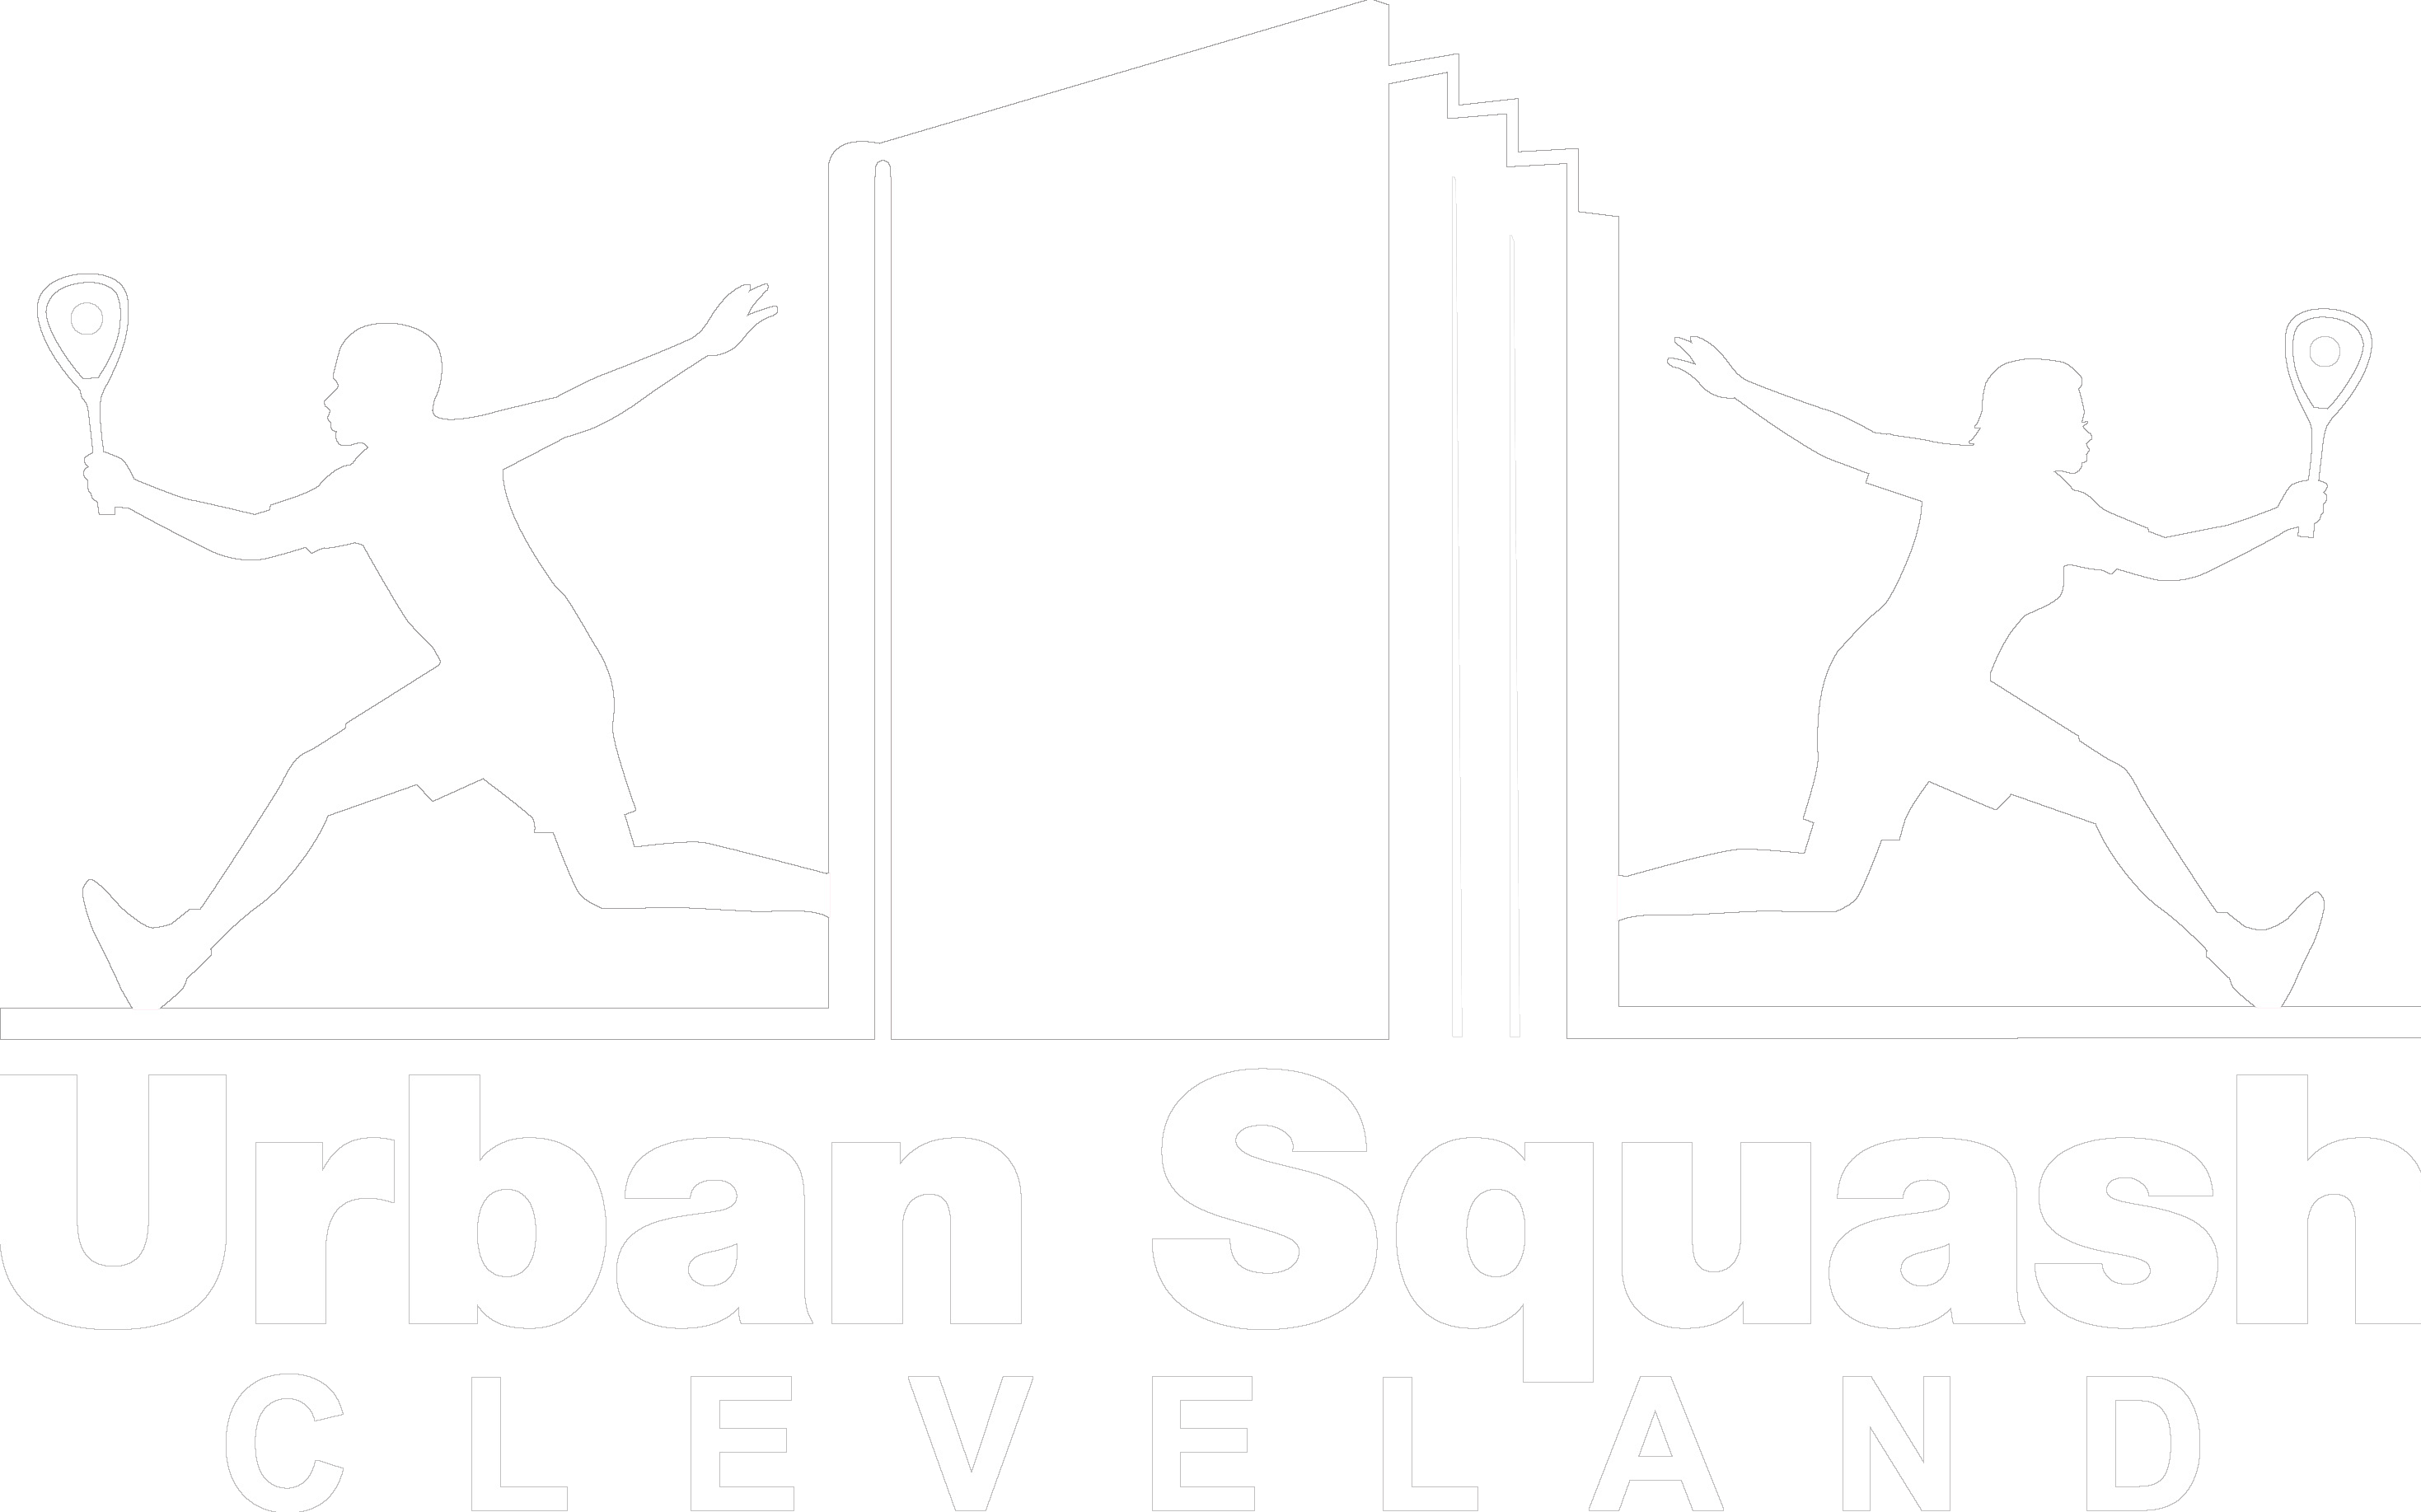 Urban Squash Cleveland